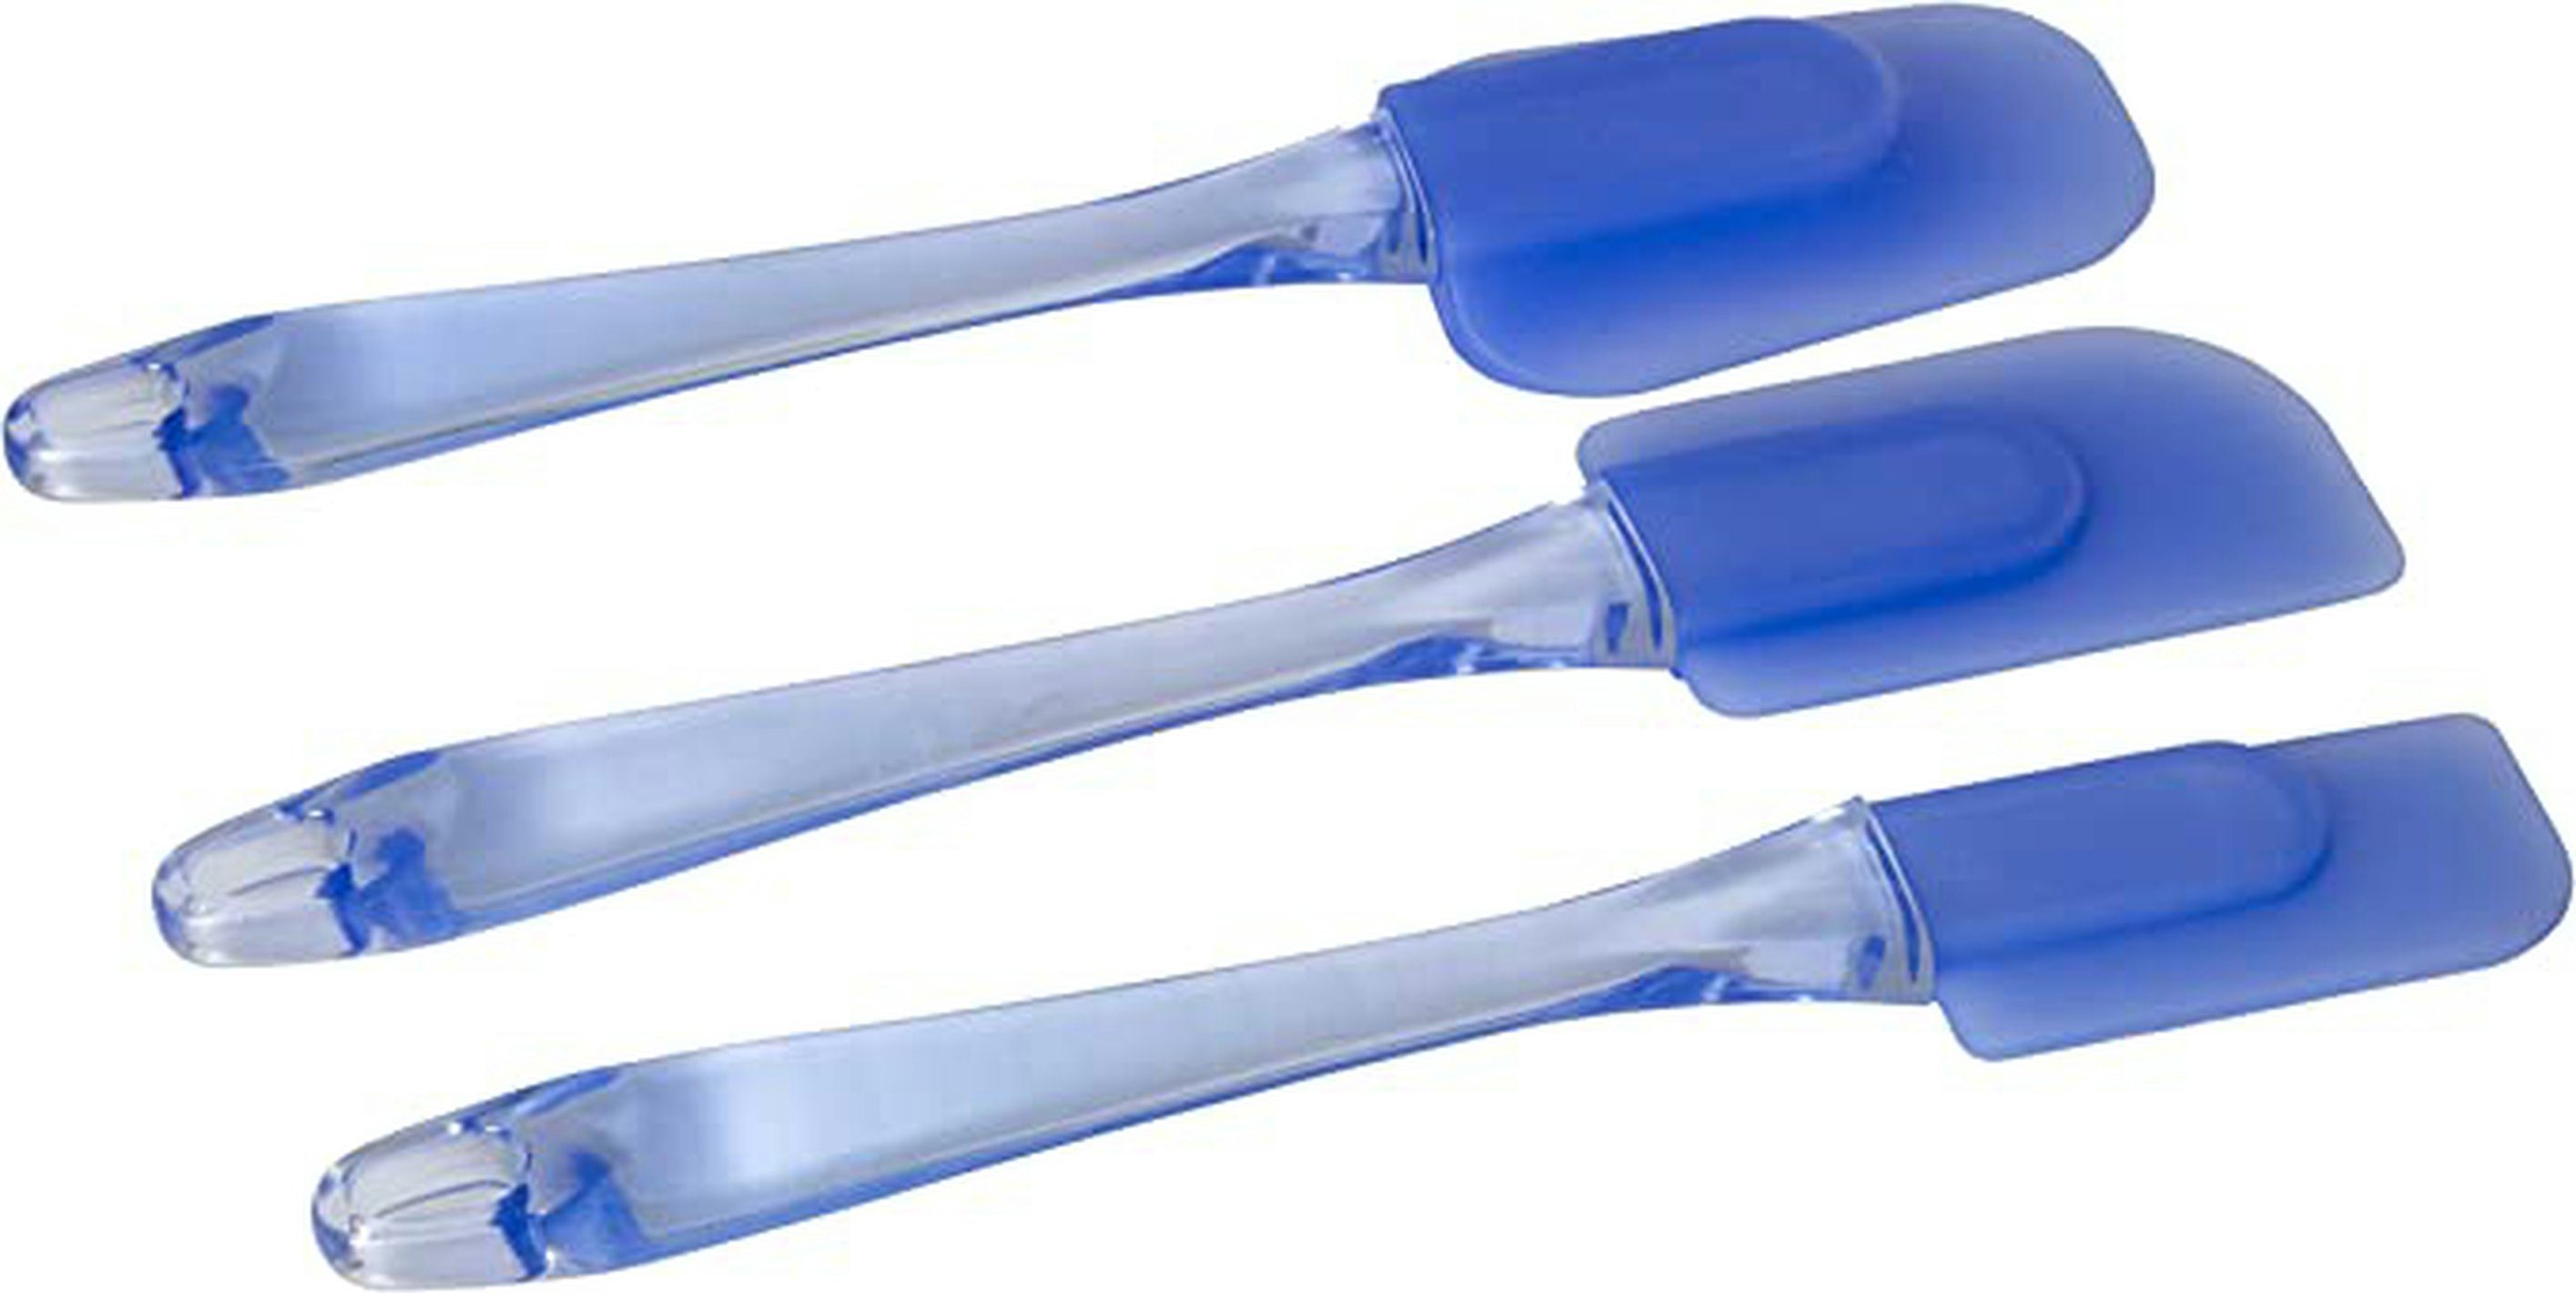 RUBBERNECK Teigspachtel Teigspachtel aus Silikon in blau, 3-teilig im Set, Spülmaschinenfest, lebensmittelecht, BPA-frei, langlebig